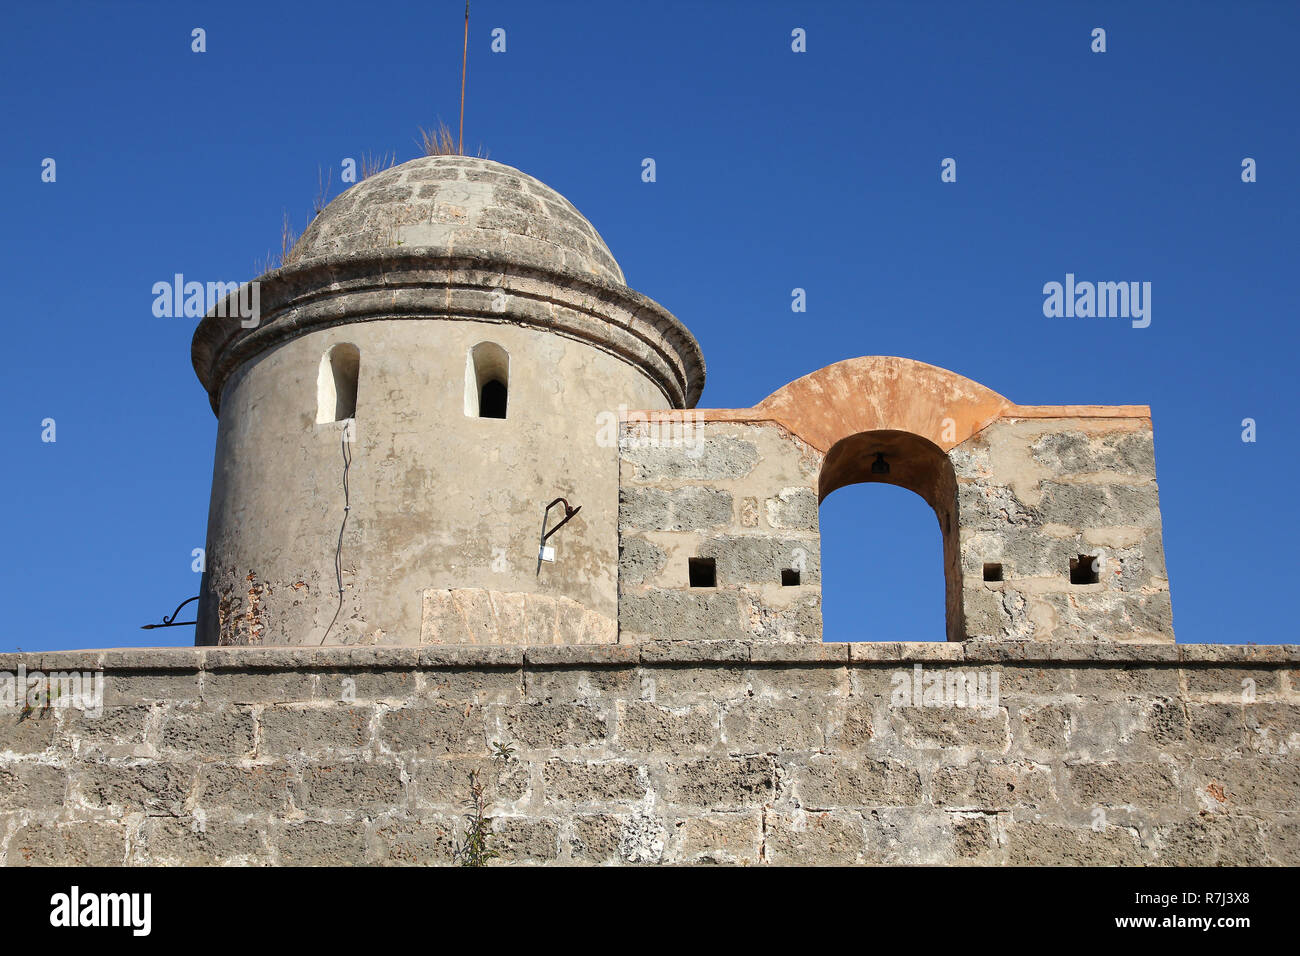 Cienfuegos, Kuba - berühmte alte El Jagua Festung Turm Stockfoto